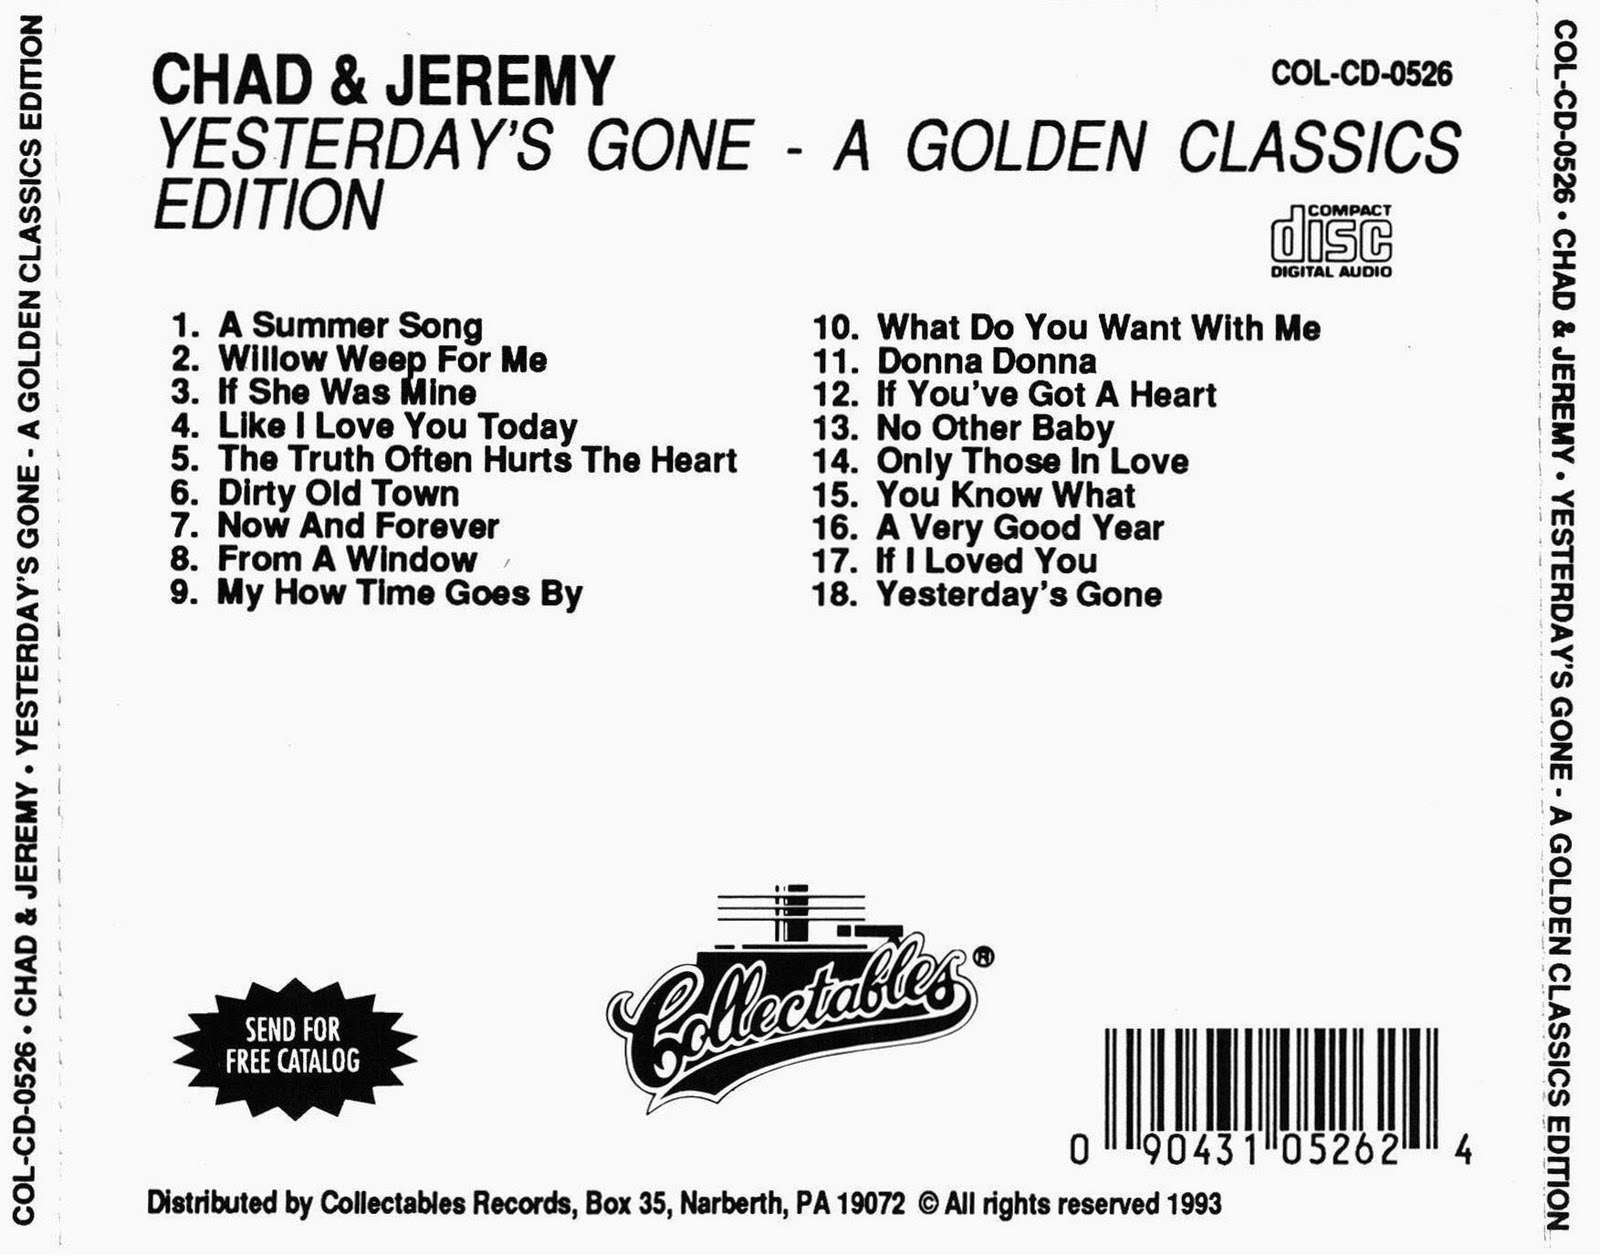 http://4.bp.blogspot.com/-gJIso7SH8dM/TnKFQlRw8kI/AAAAAAAAB_E/9agQv0Ay9JA/s1600/chad_jeremy_yesterdays_gone_a_golden_classics_edition_1993_retail_cd-back.jpg